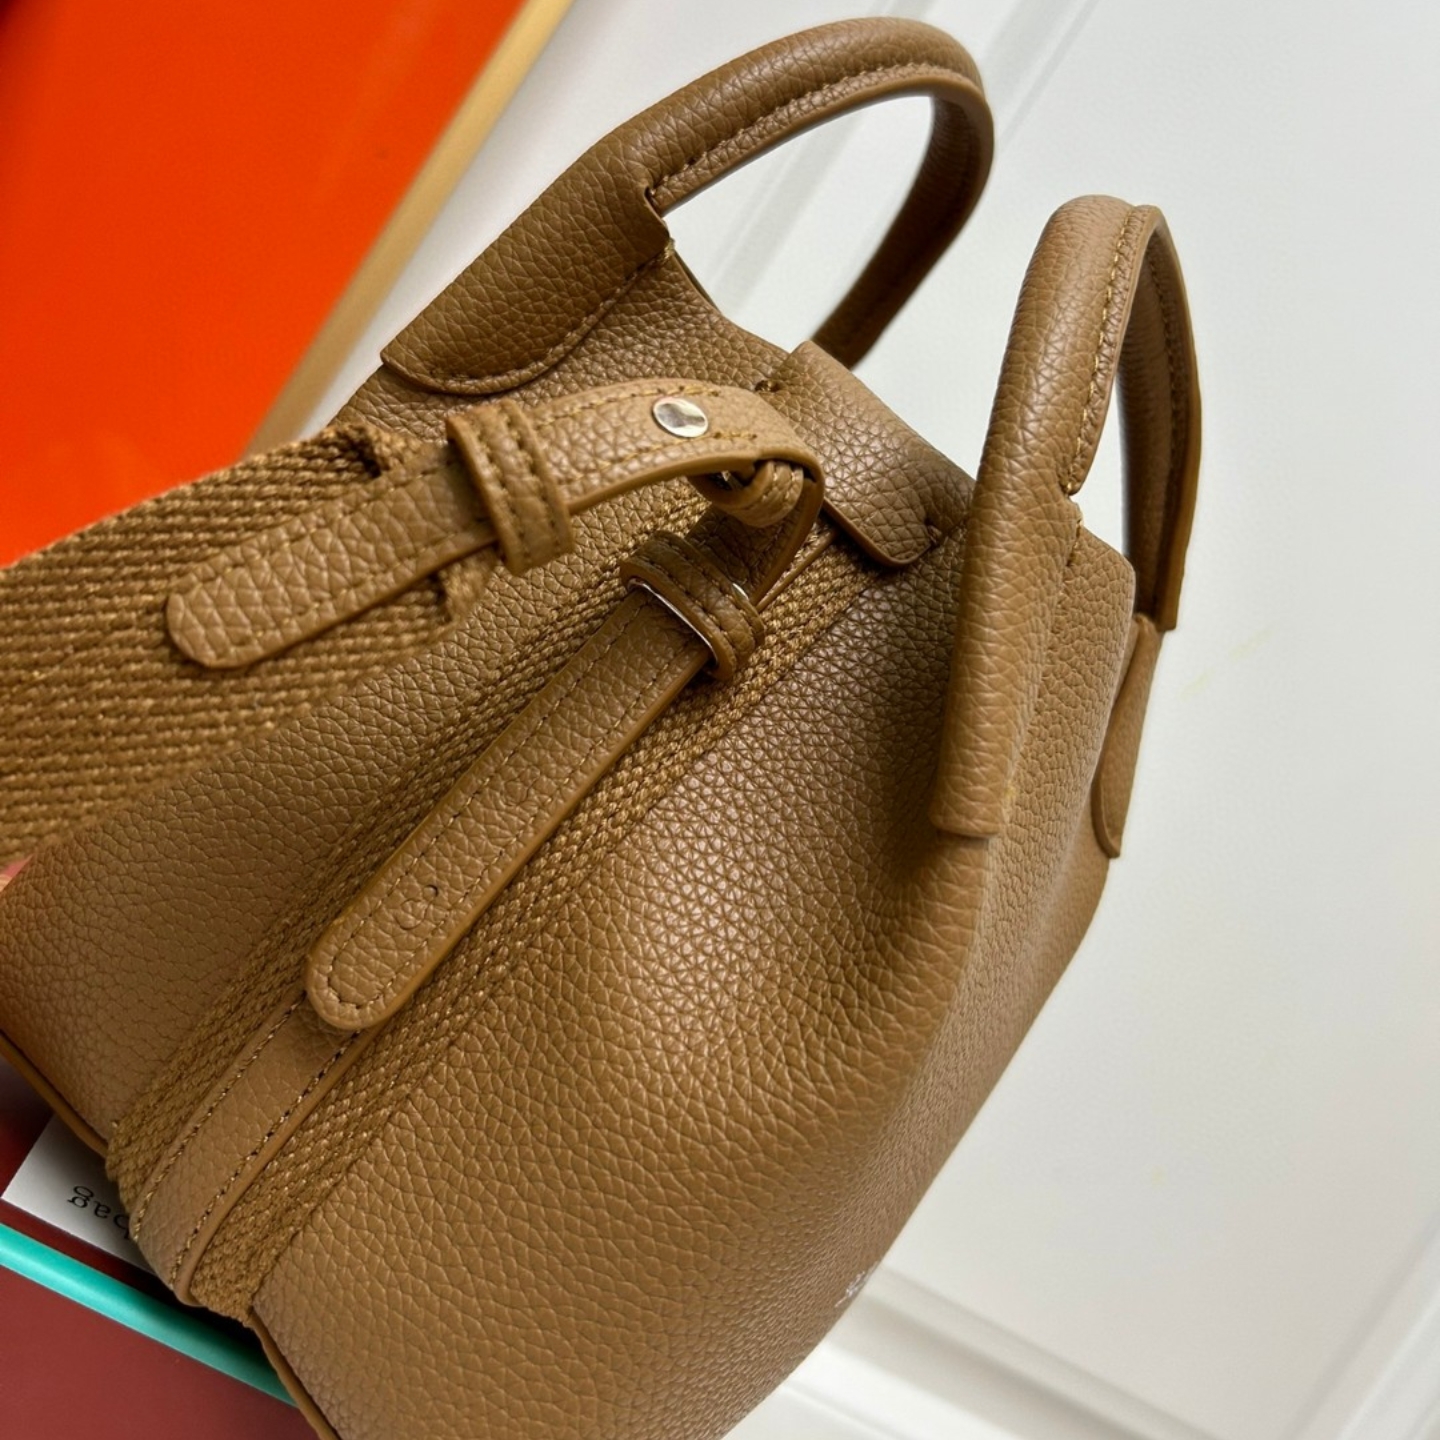 P170-2 جودة عالية الجودة حقيبة دلو حقيبة الظهر يمكن أن تكون حقيبة يد الكتف إلى الخلف ، محمولة ، عصرية ، وارتداء يوميا الحجم 16x14x14cm